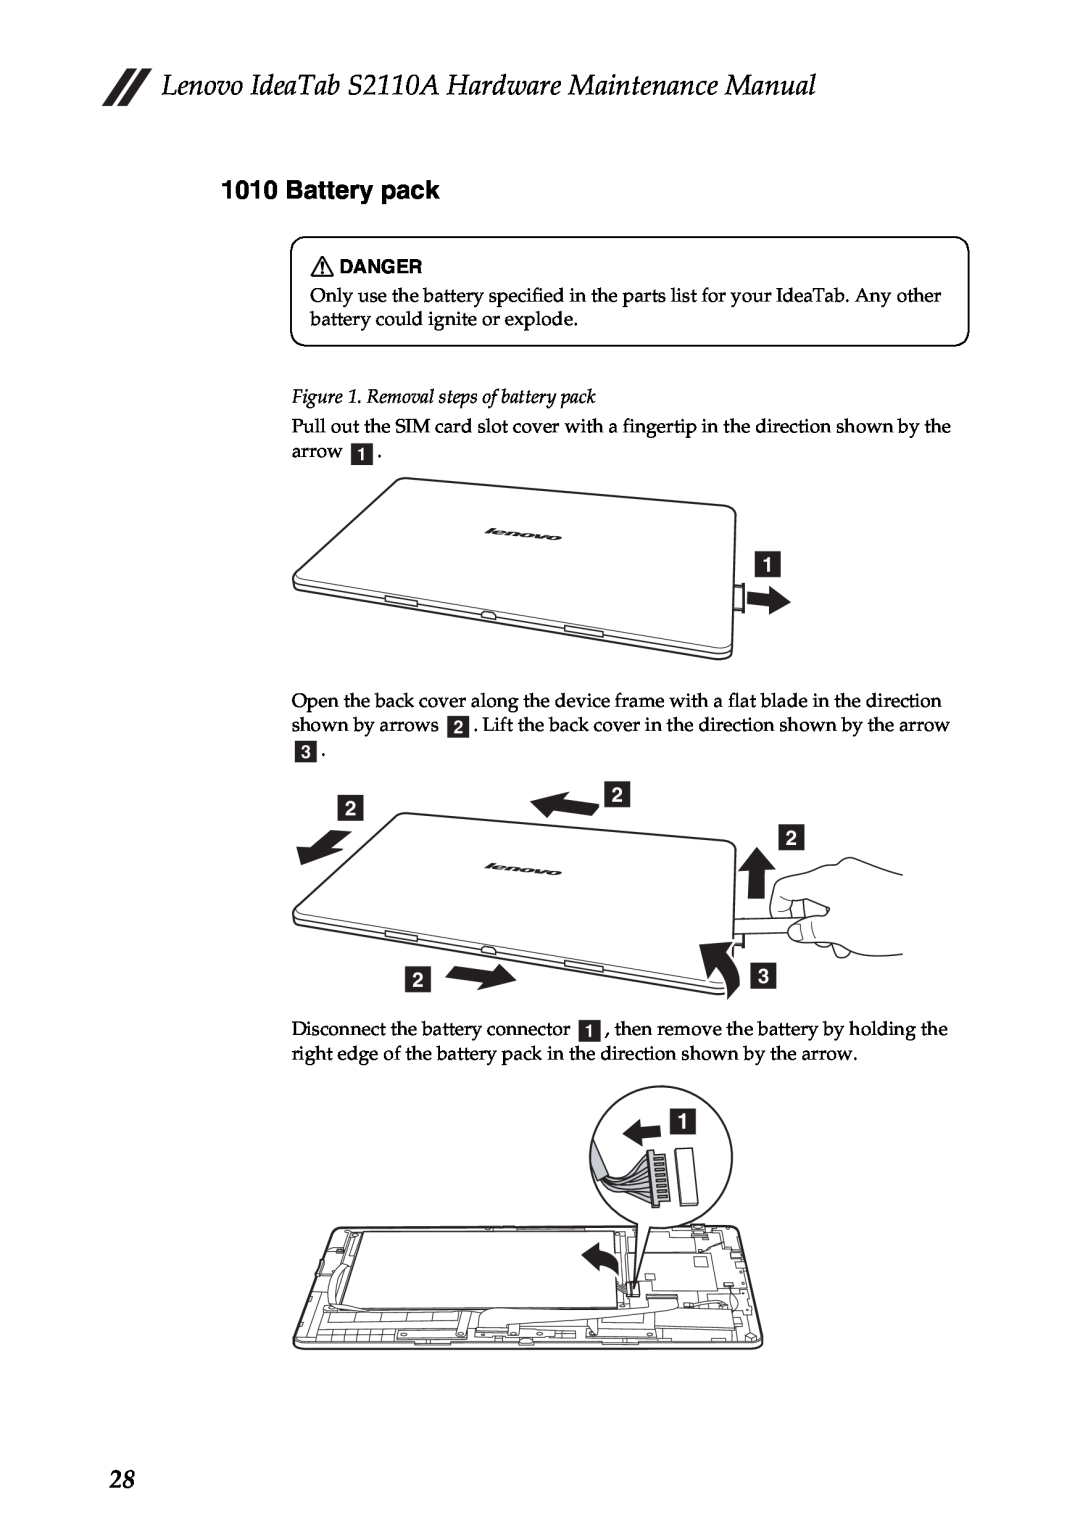 Lenovo manual Battery pack, Lenovo IdeaTab S2110A Hardware Maintenance Manual 